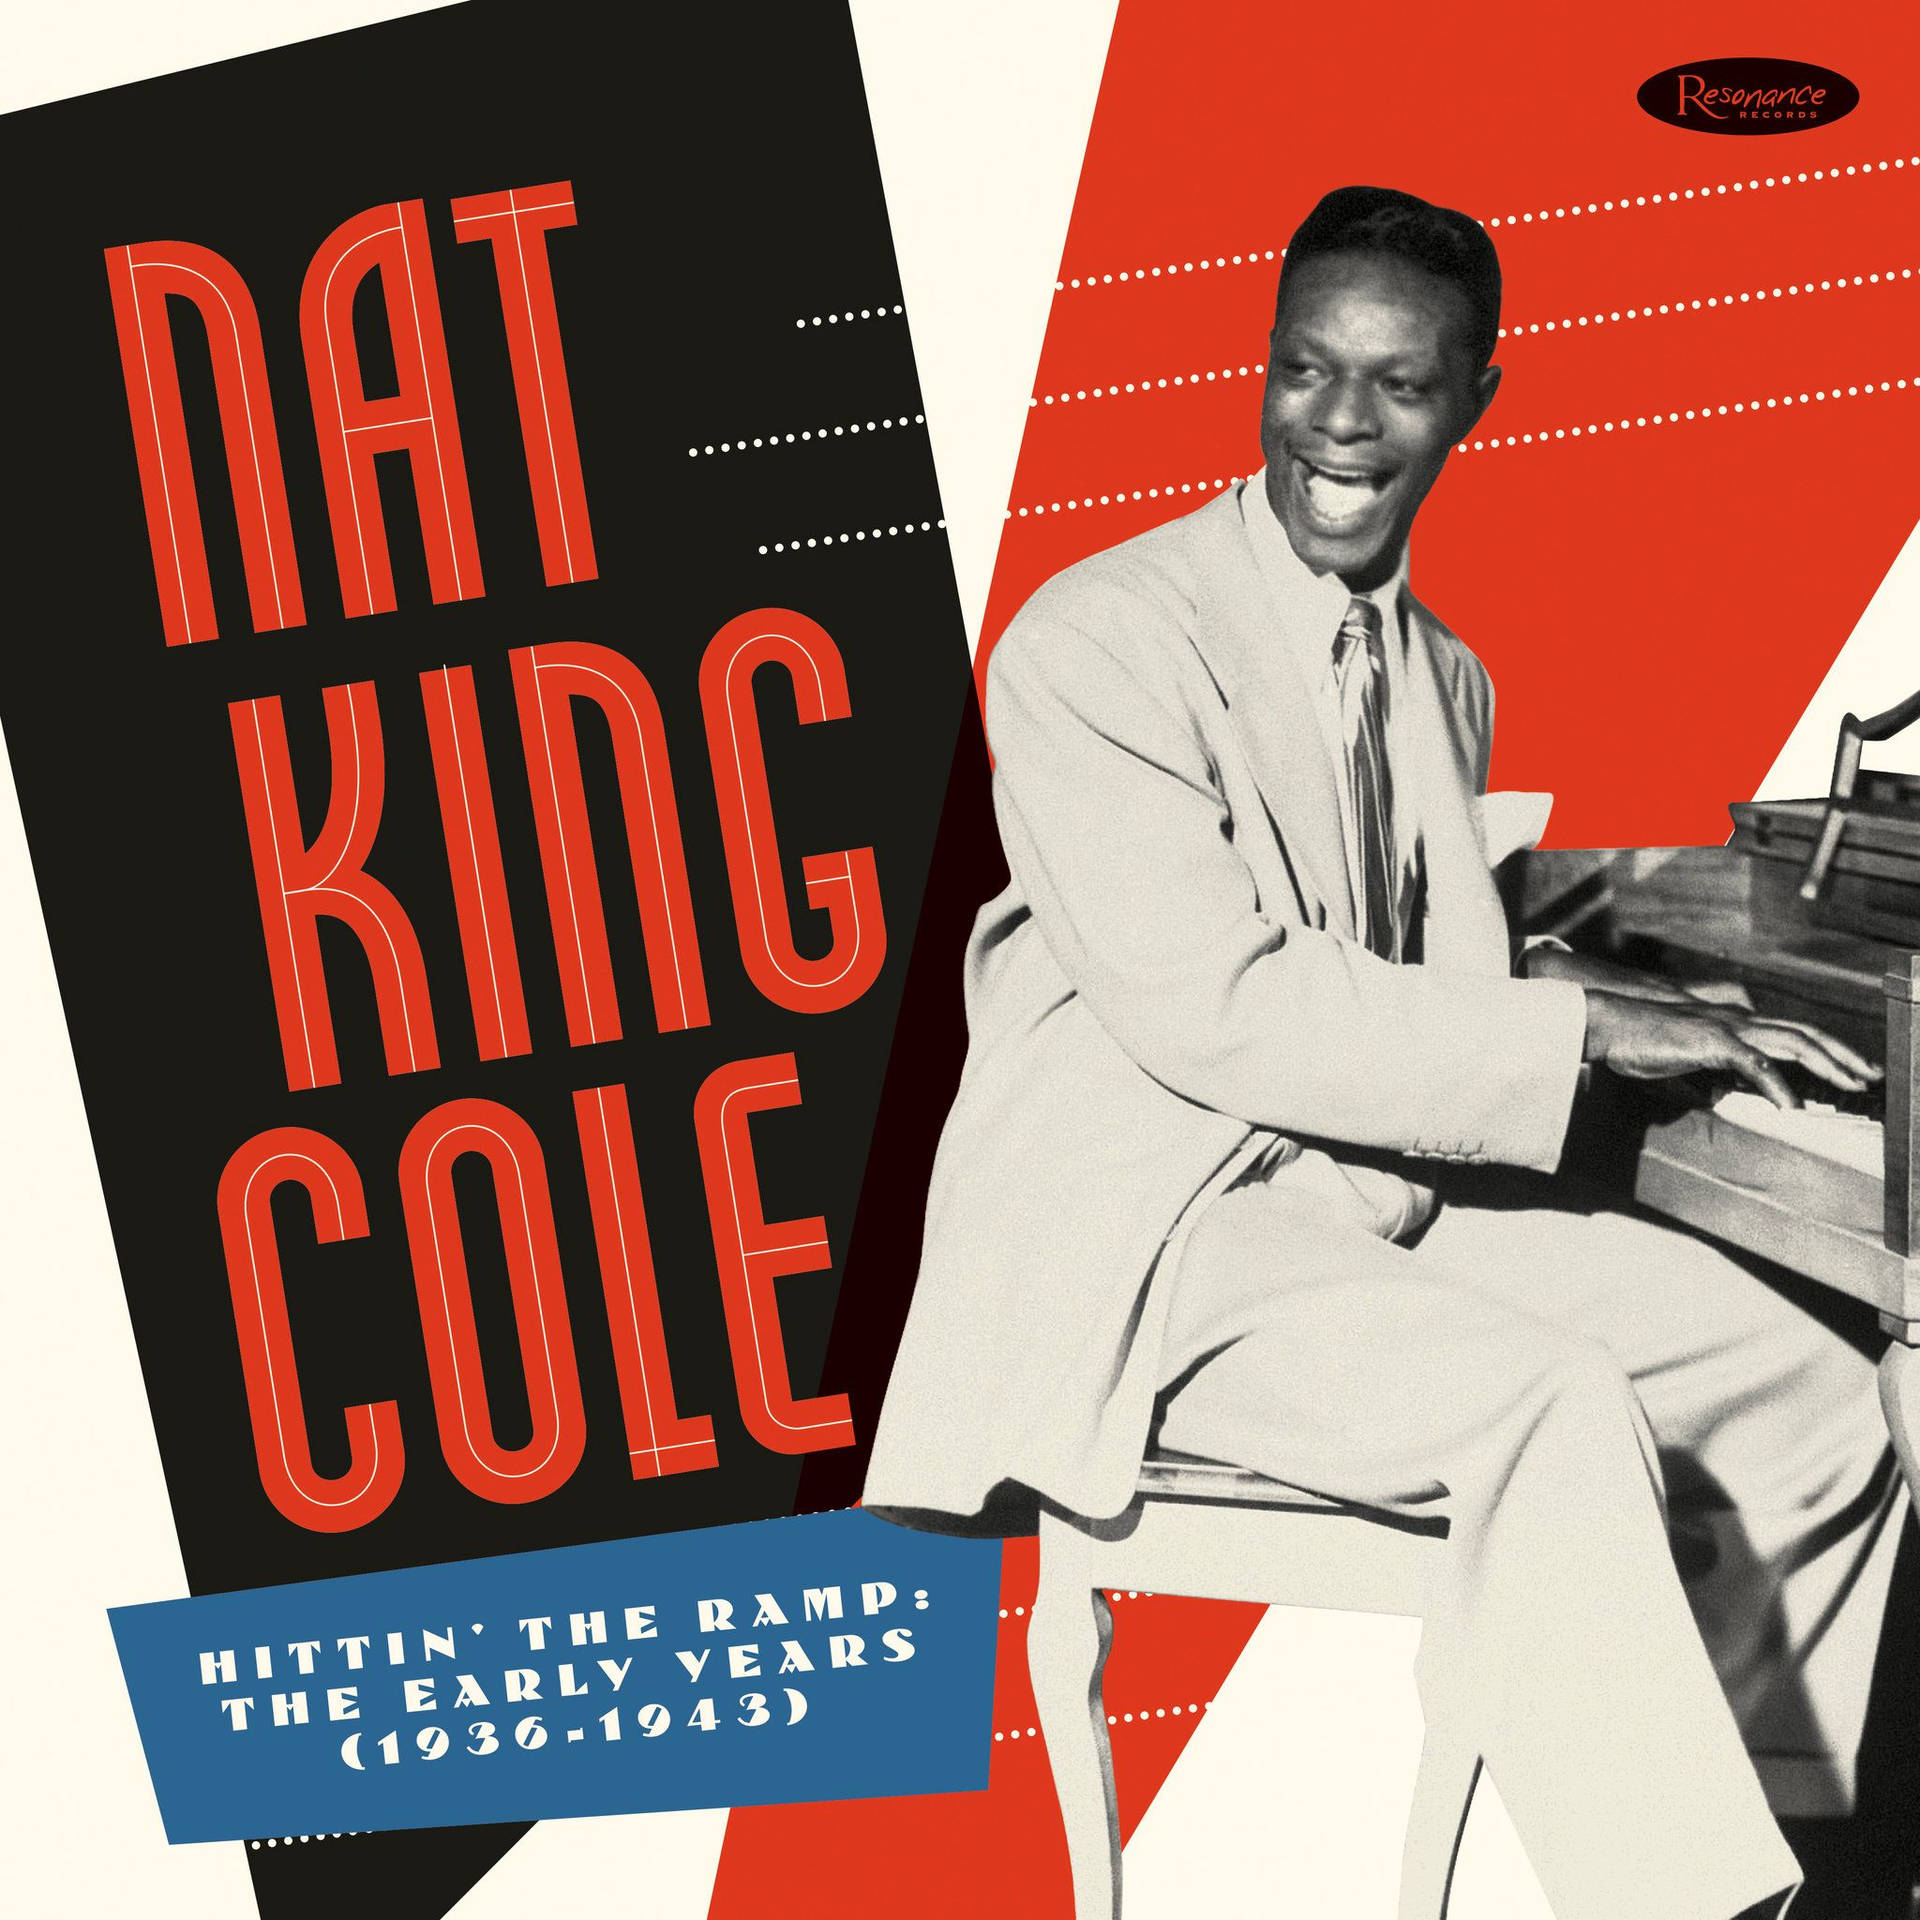 Nat King Cole Digital Album Cover Art Wallpaper